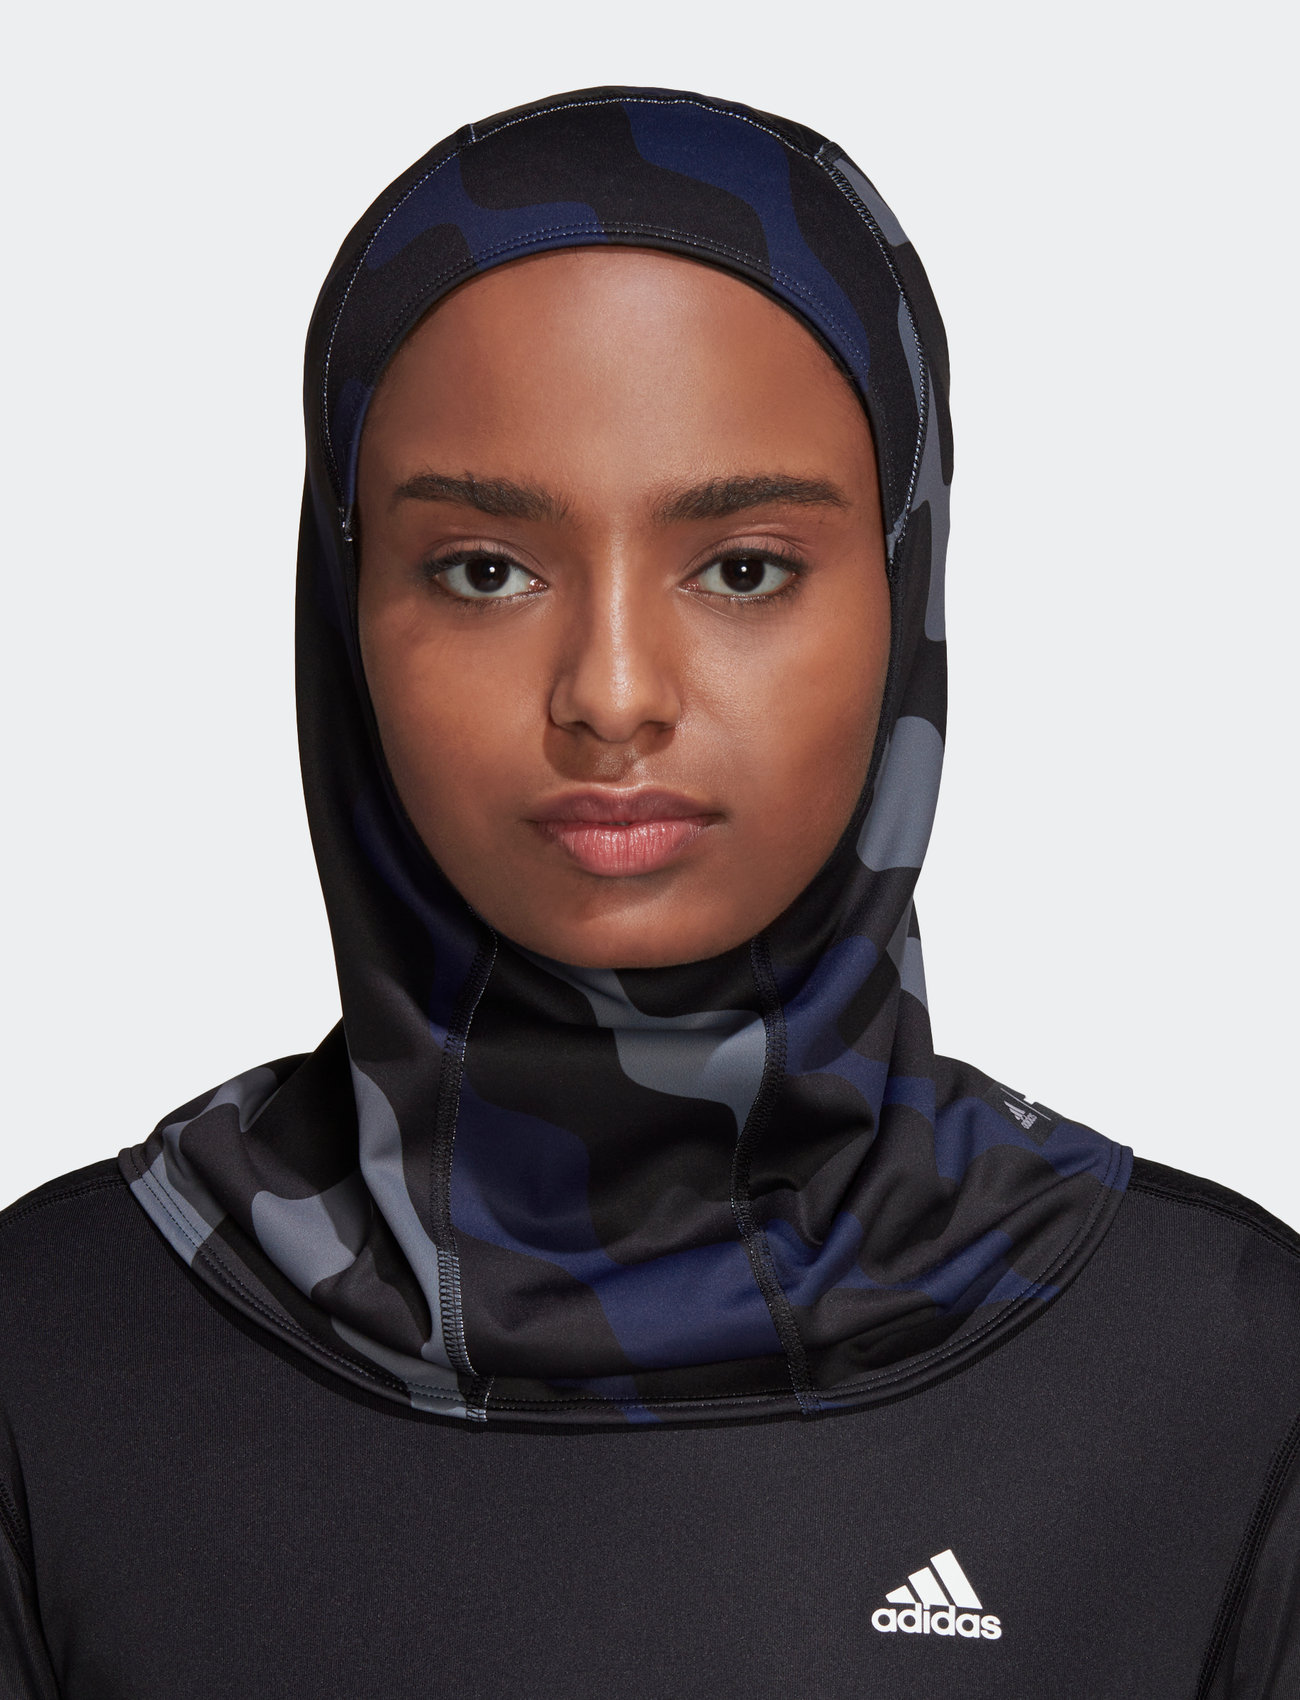 hoog haar Activeren adidas Performance Marimekko Hijab - Sportartikelen | Boozt.com